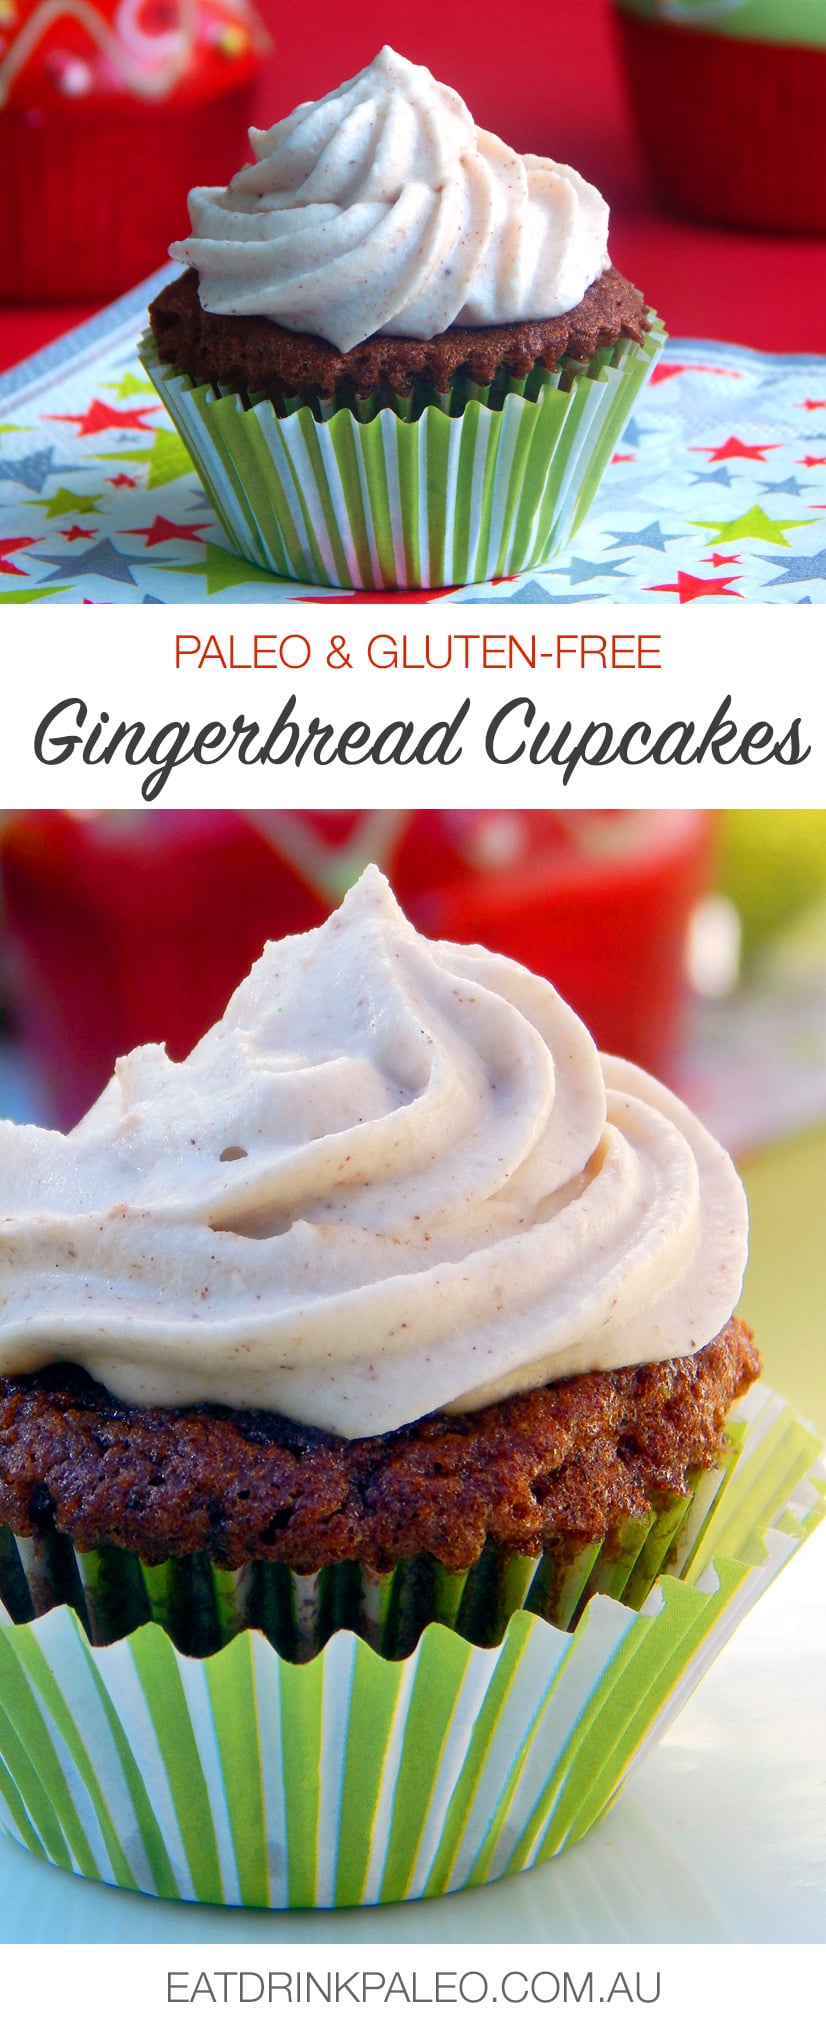 Paleo Gingerbread Cupcakes (Nut-free, gluten-free recipe)